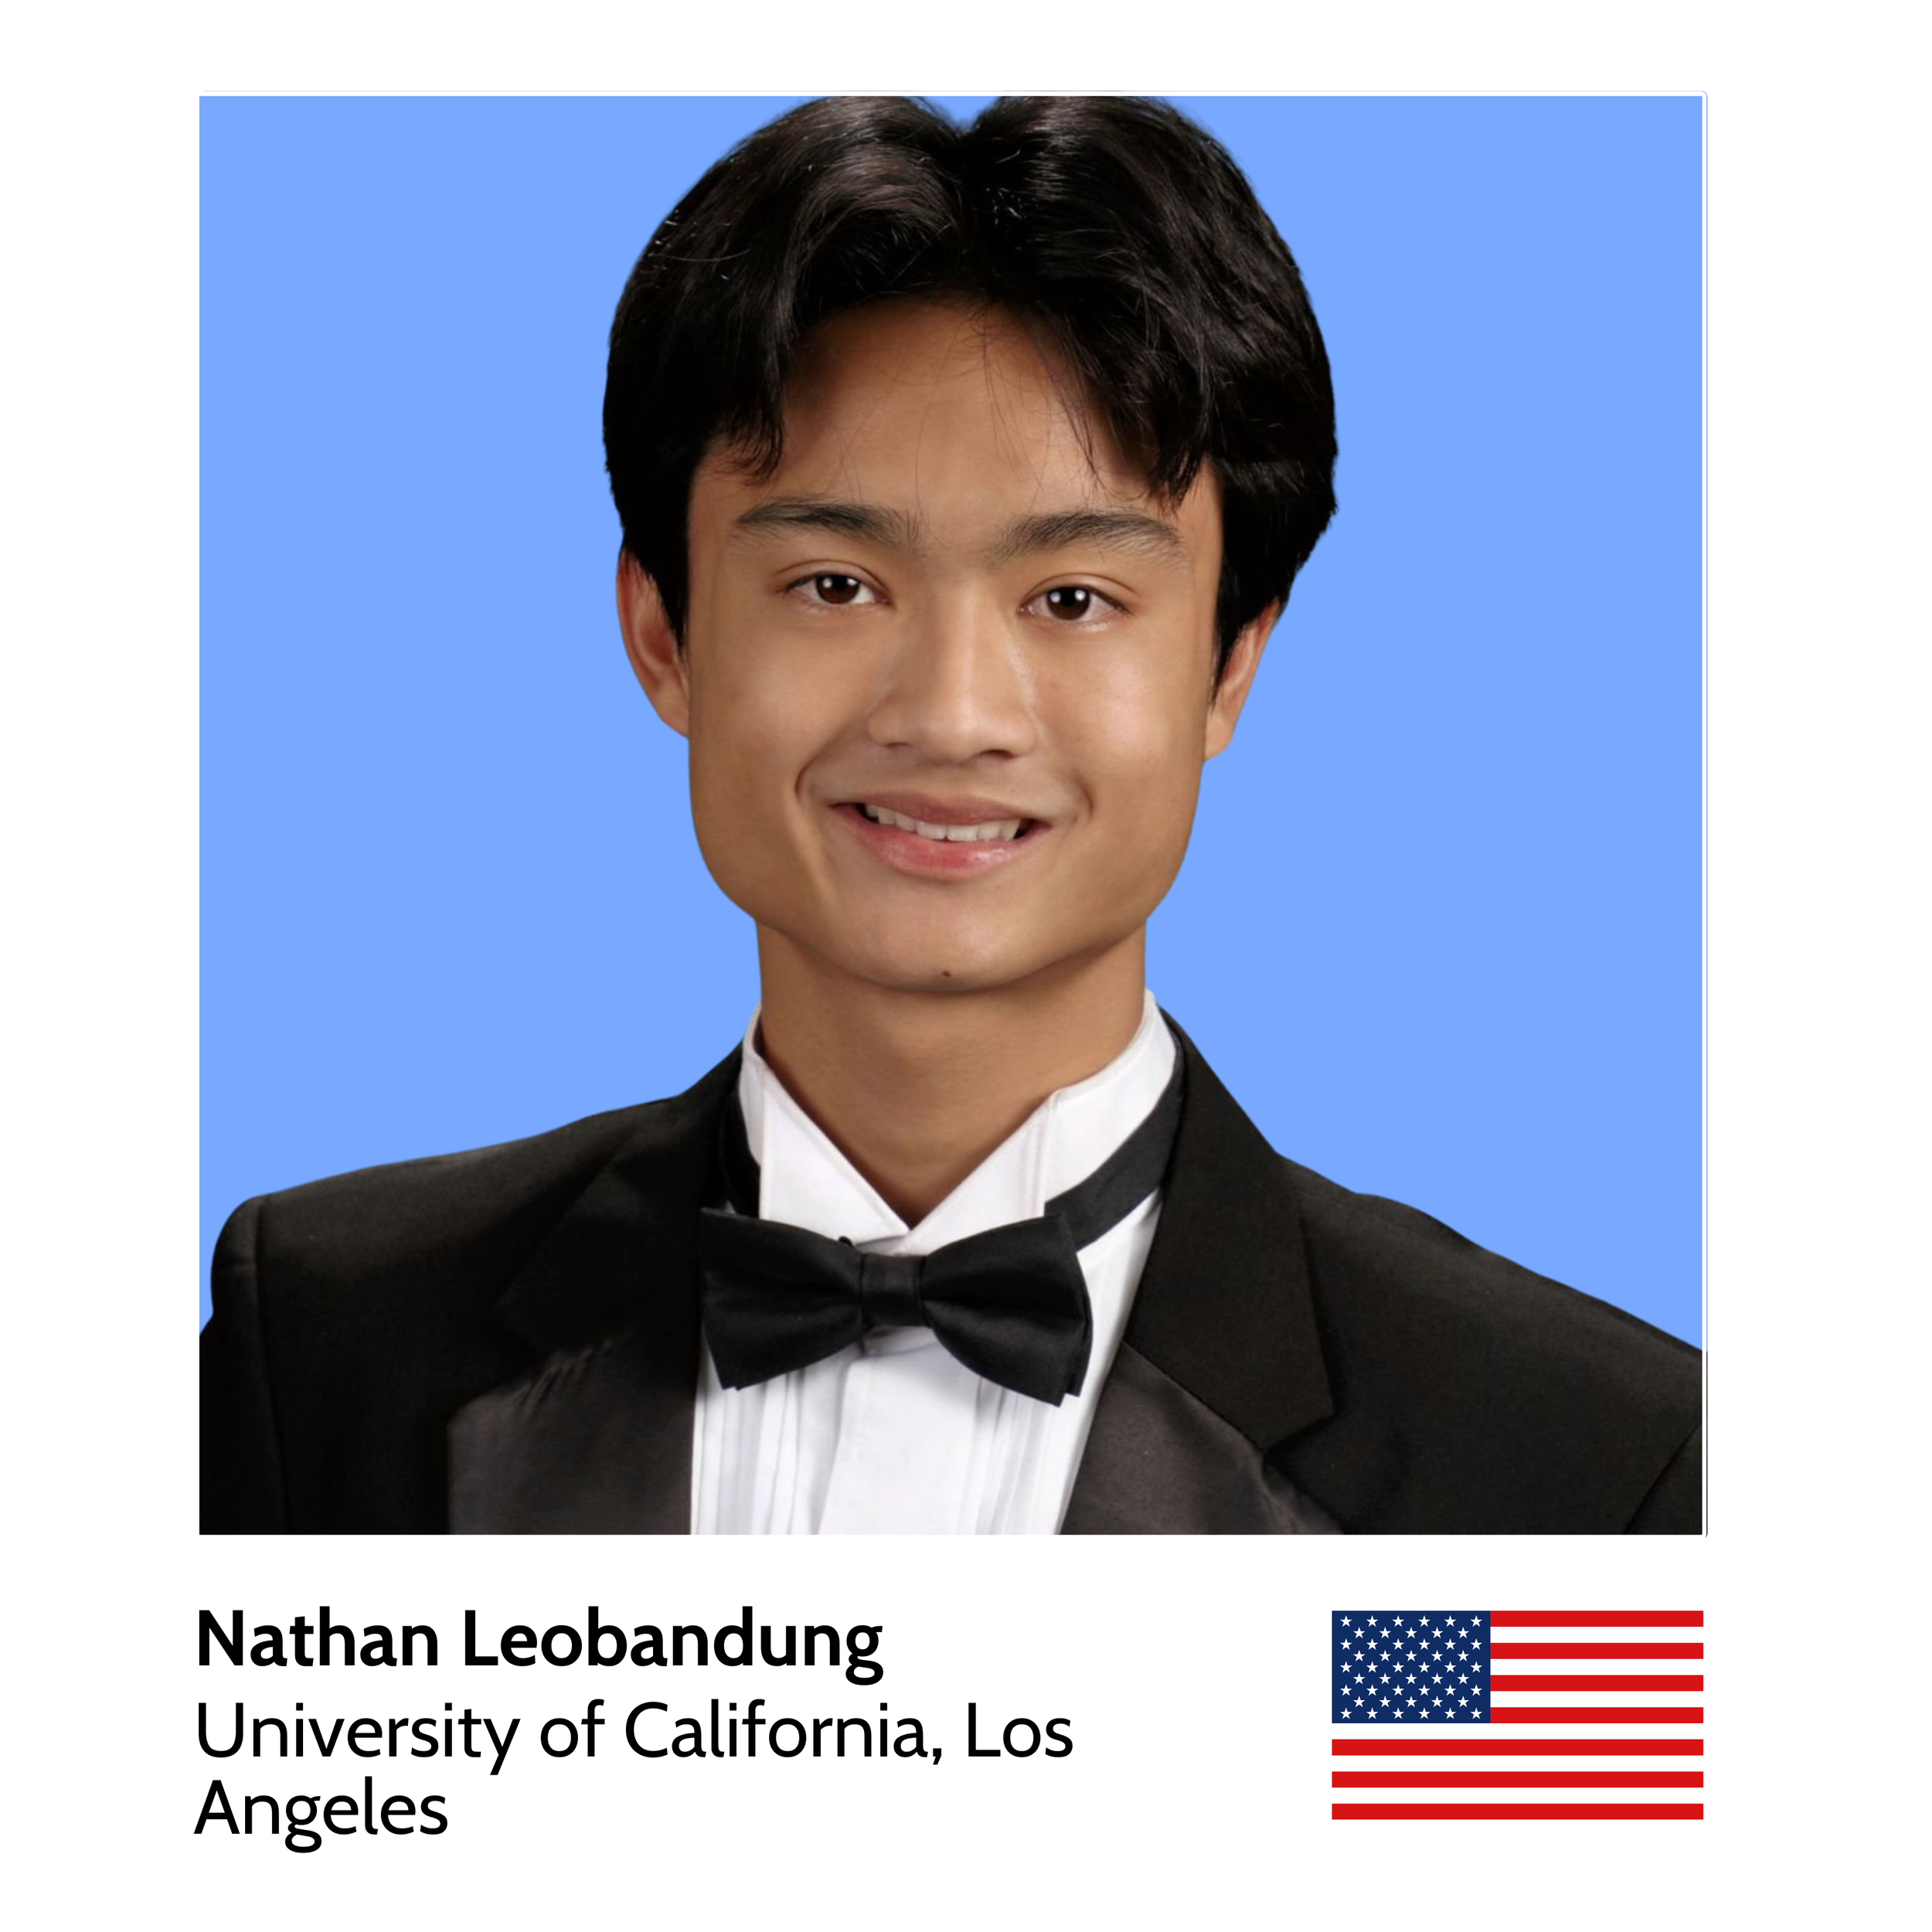 Your_Big_Year_ibm_z_student_ambassador_Nathan_Leobandung_University_of_California,_Los_Angeles.png